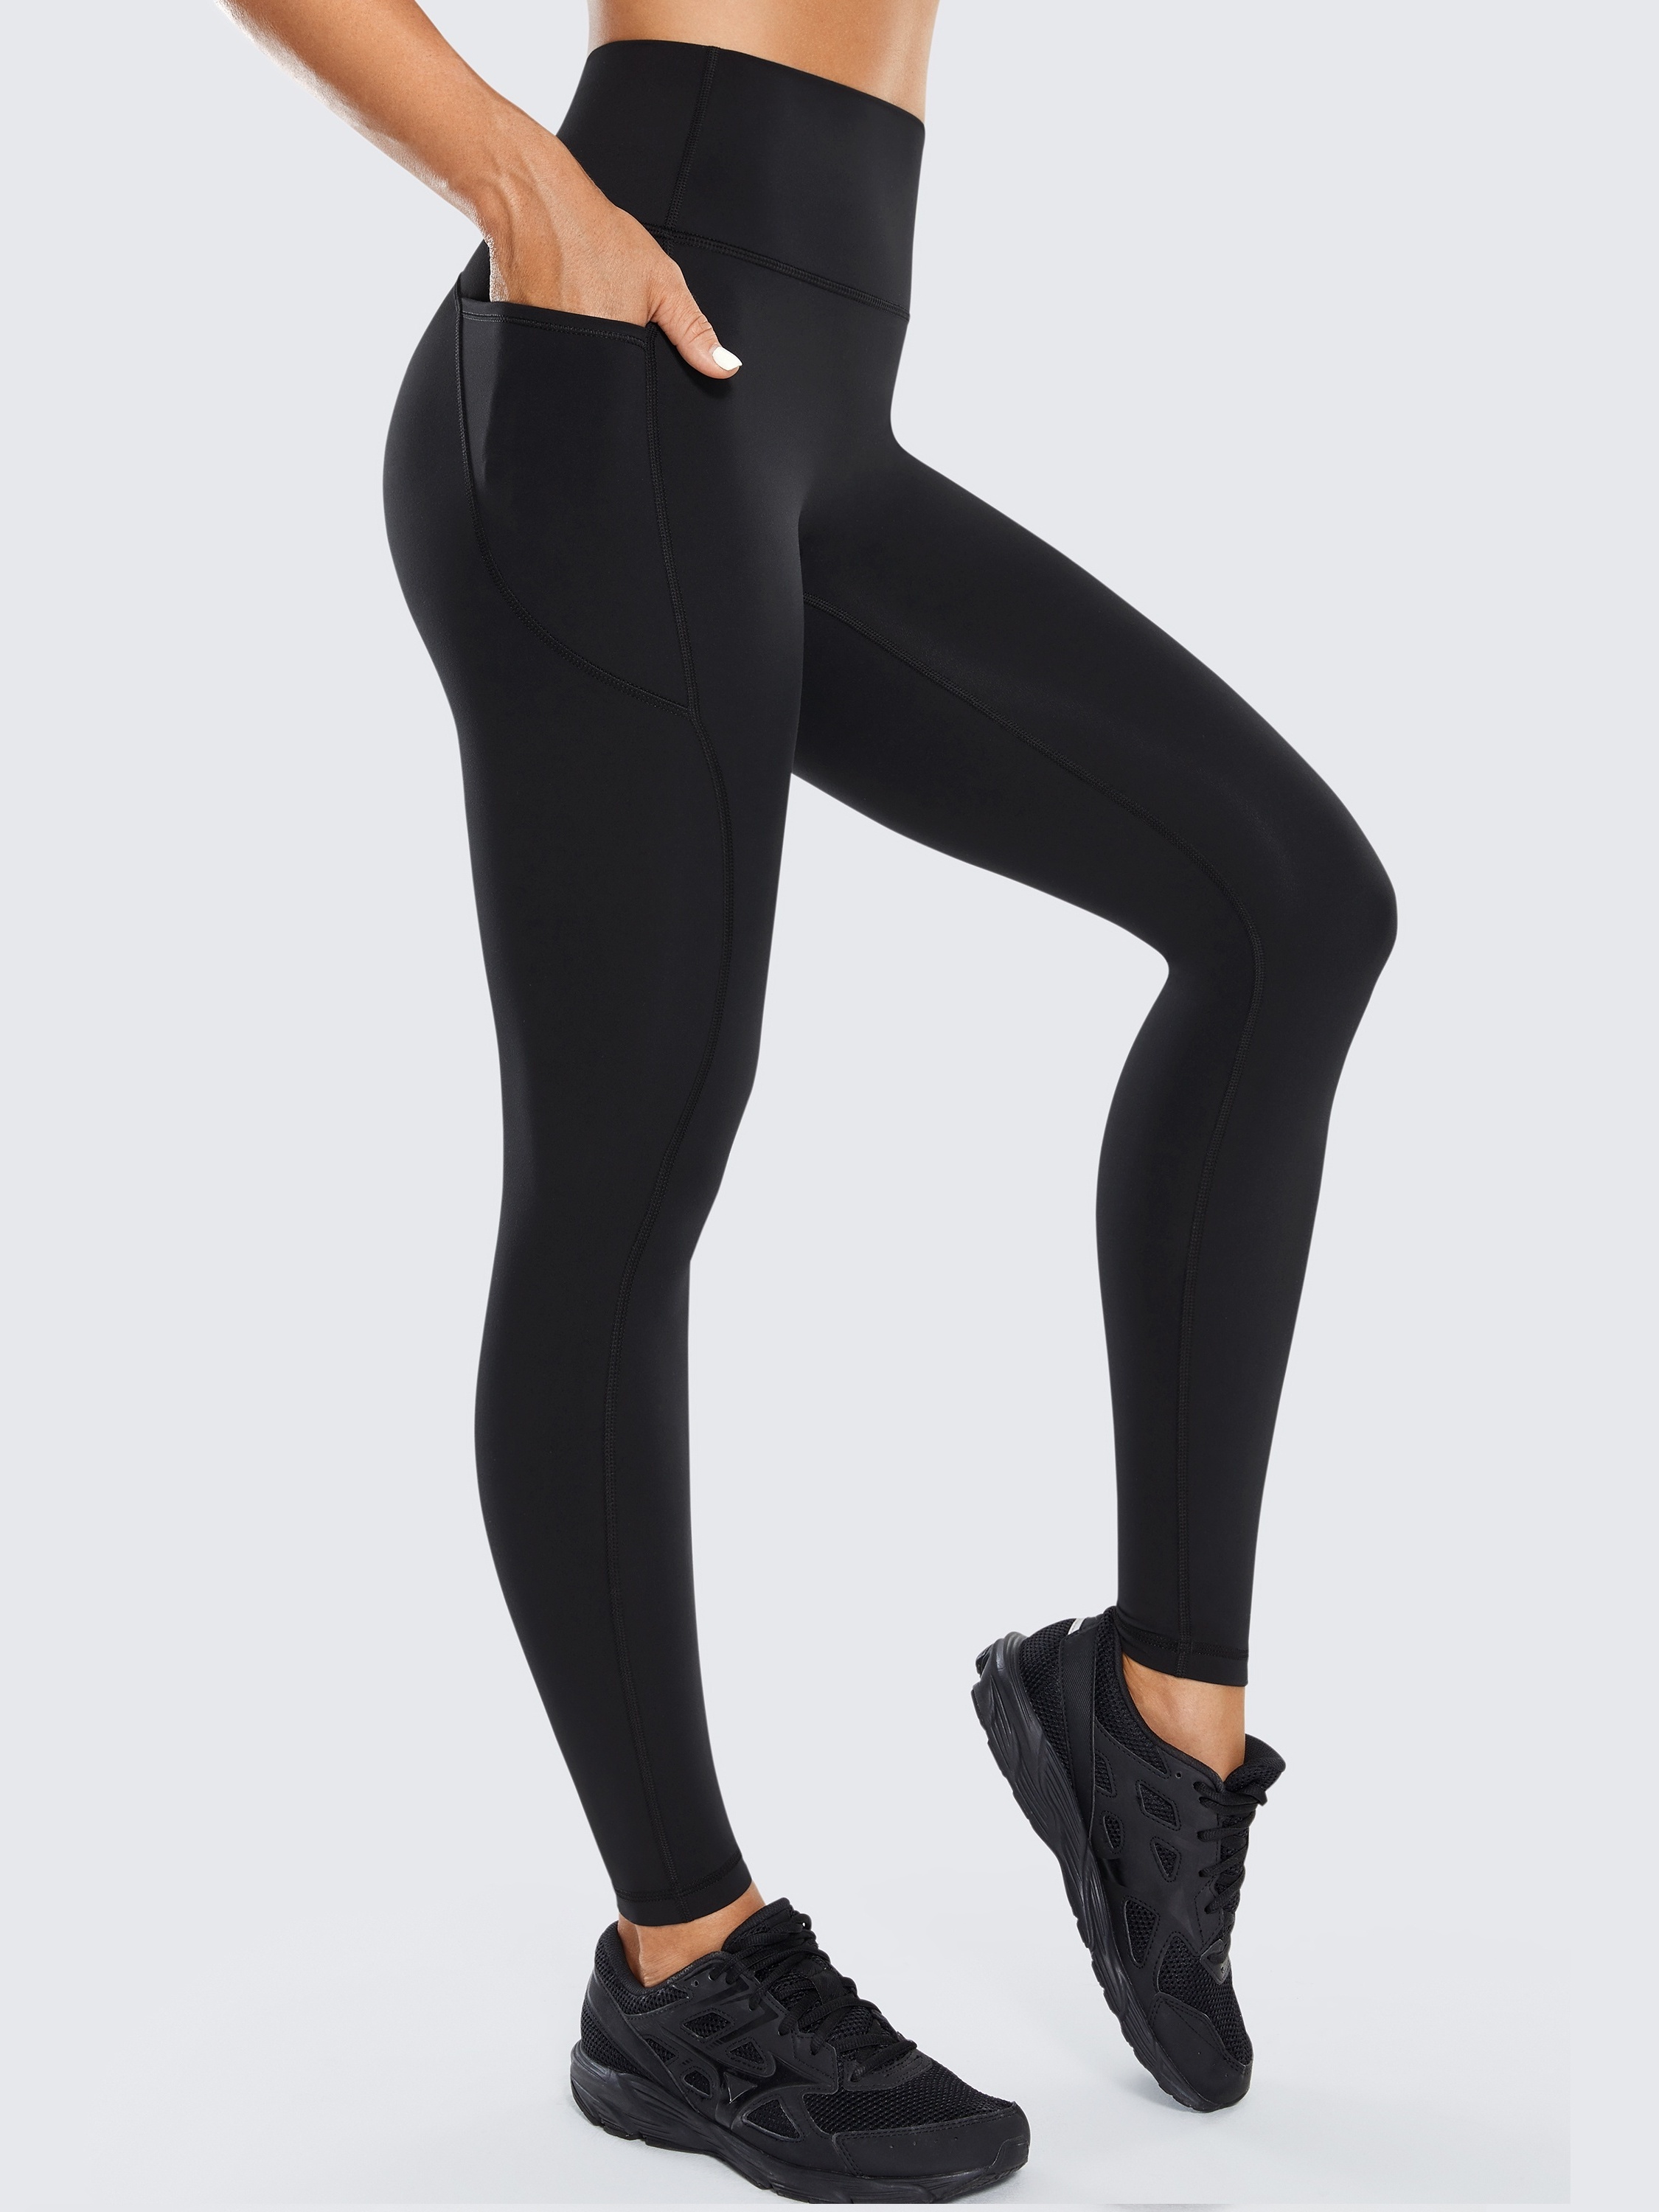 Athletic Seamless Leggings (Black) – Fitness Fashioness